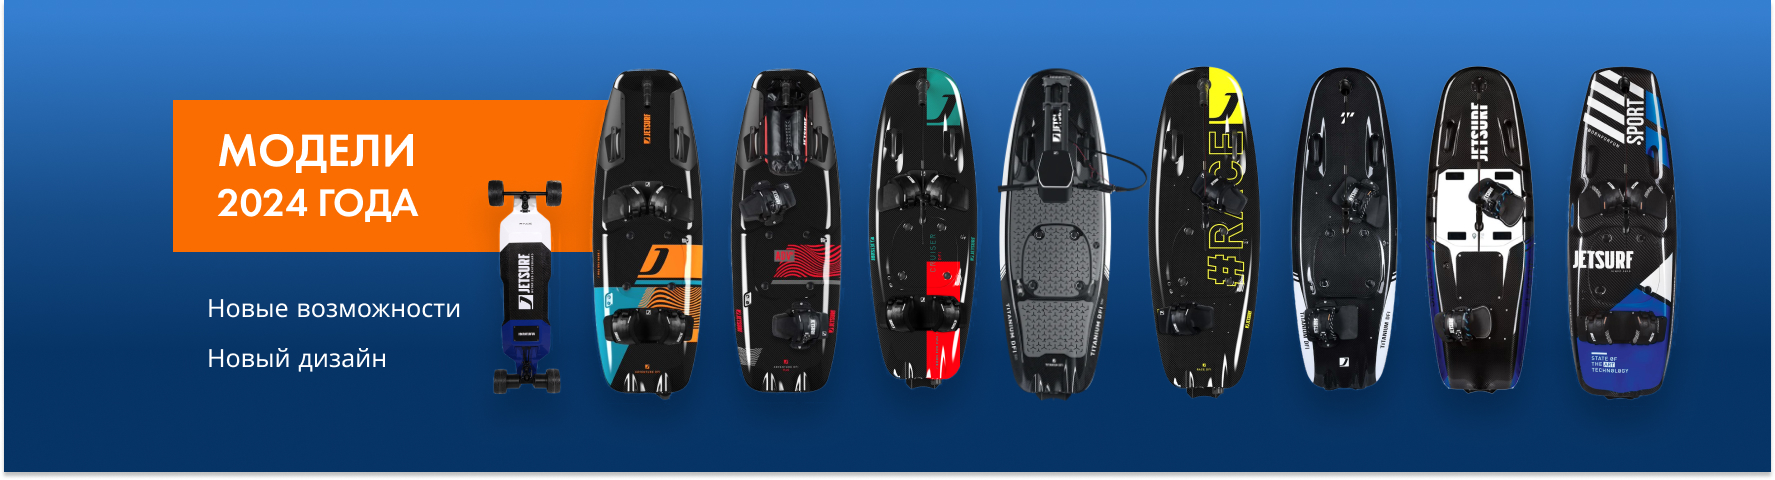 Модели Jet Surf и Motorized skateboard 2024 года